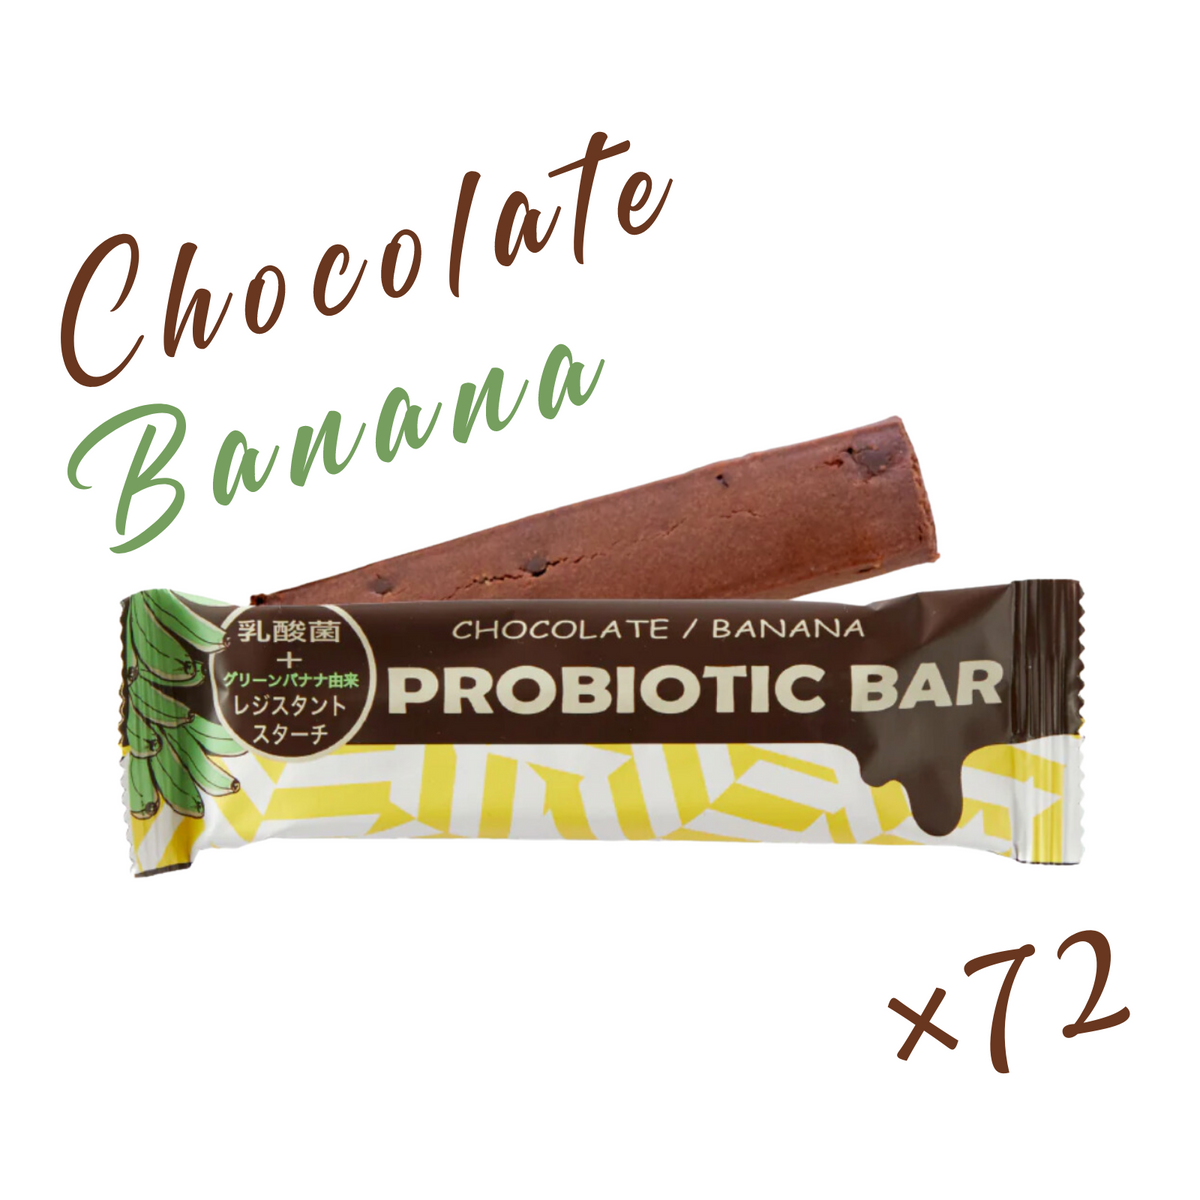 Probiotic Bar Chocolate Banana Chocolate Banana Value Set